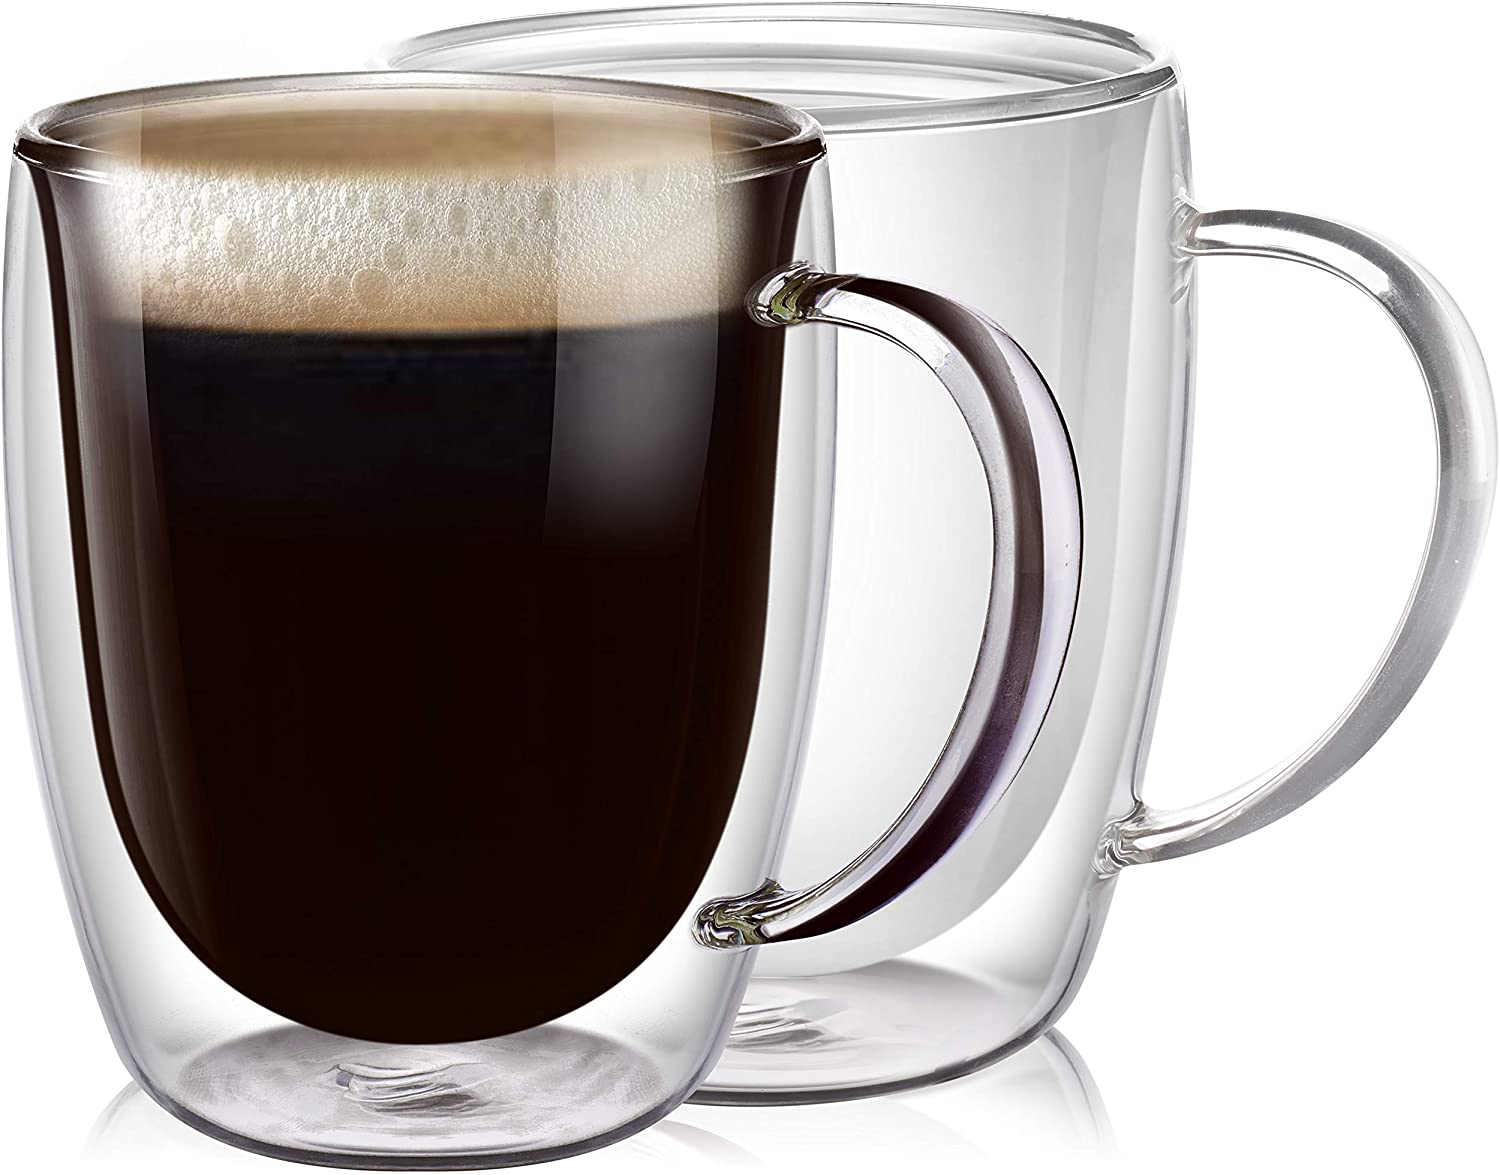 double wall glass coffee mug full of coffee shown with one empty mug